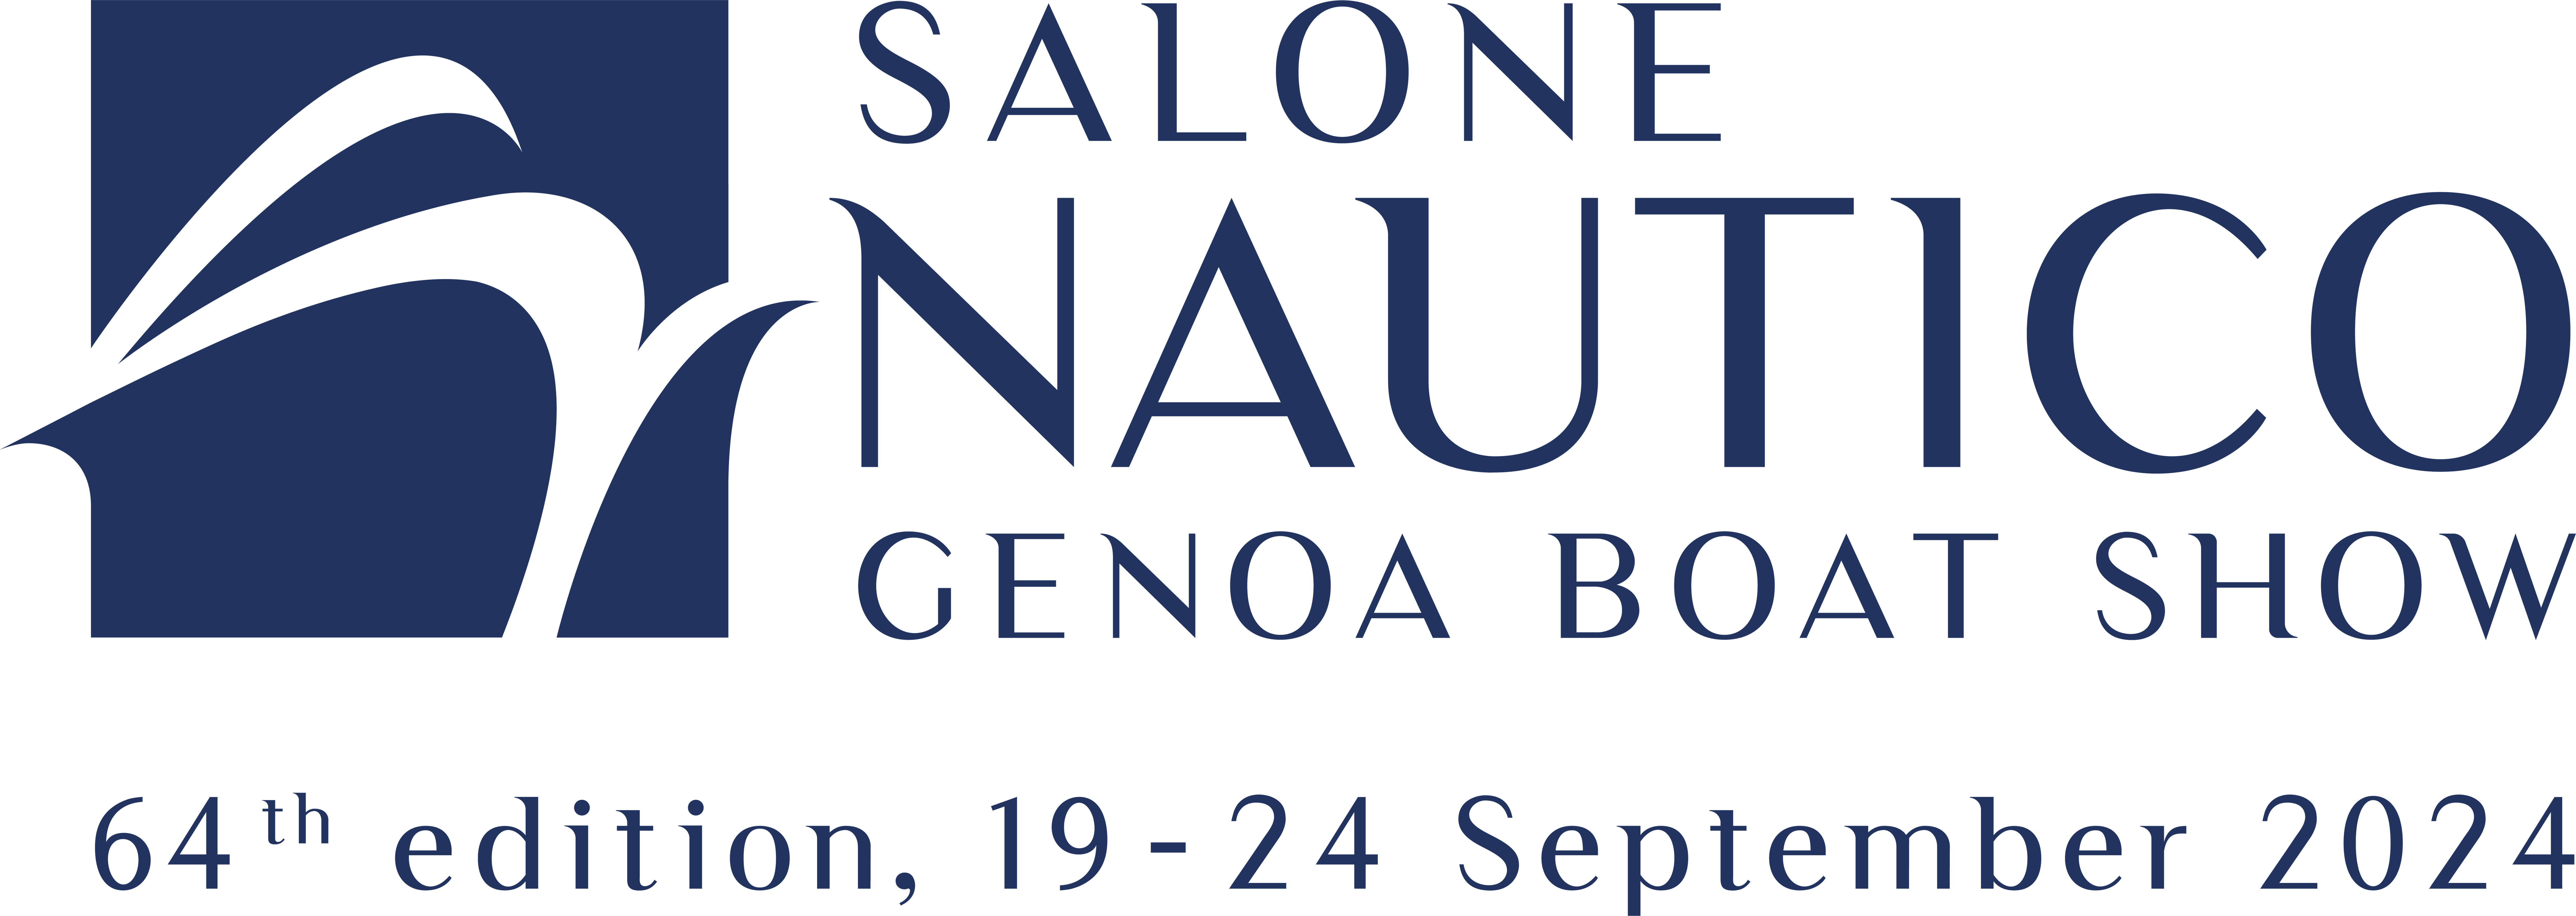 64th International Genoa Boat Show logo - blue and white horizontal version